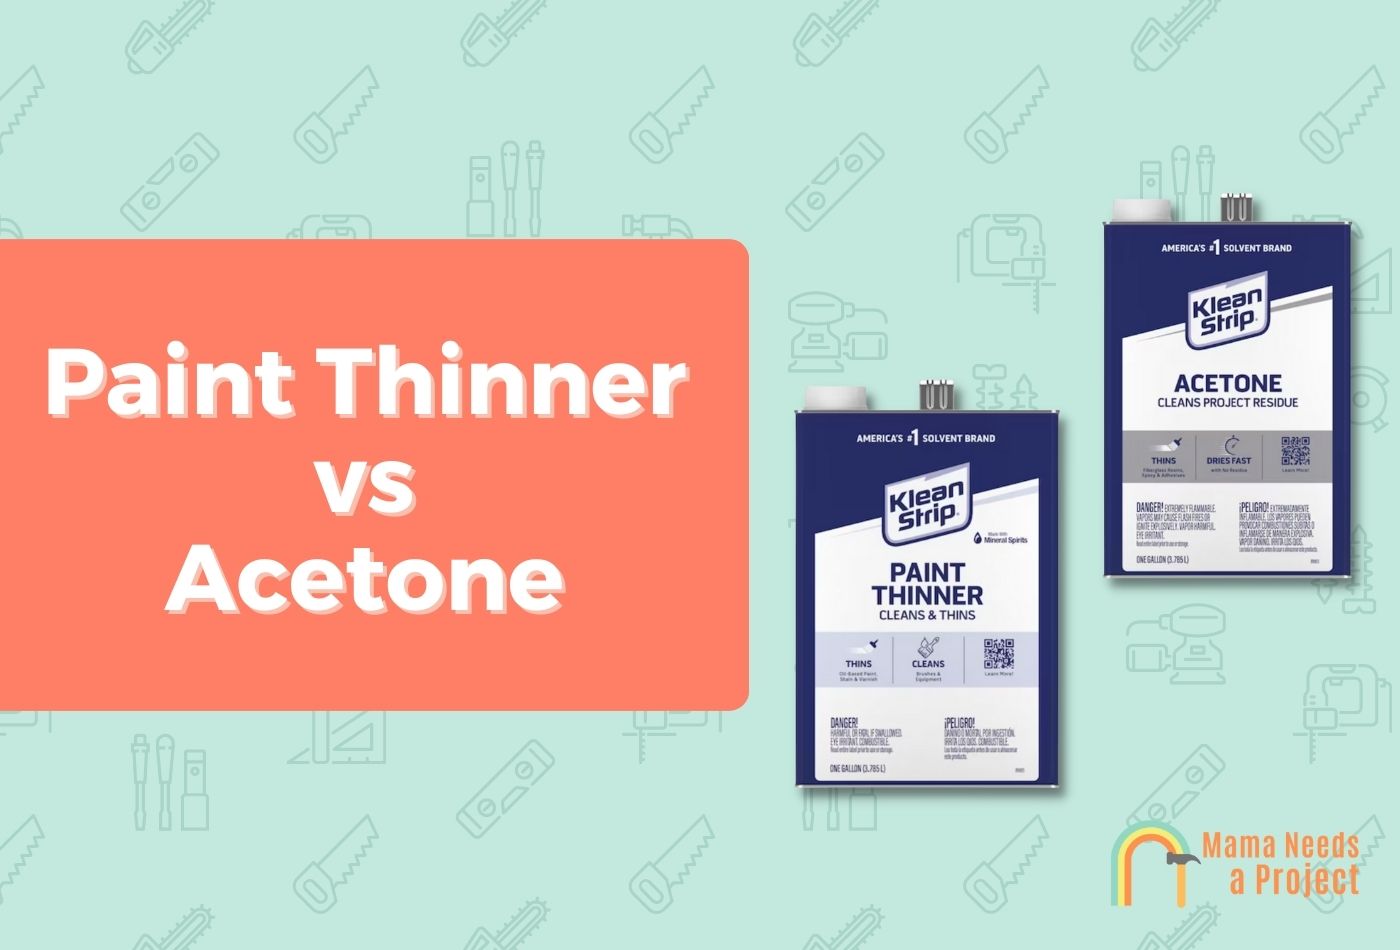 Paint Thinner vs Acetone